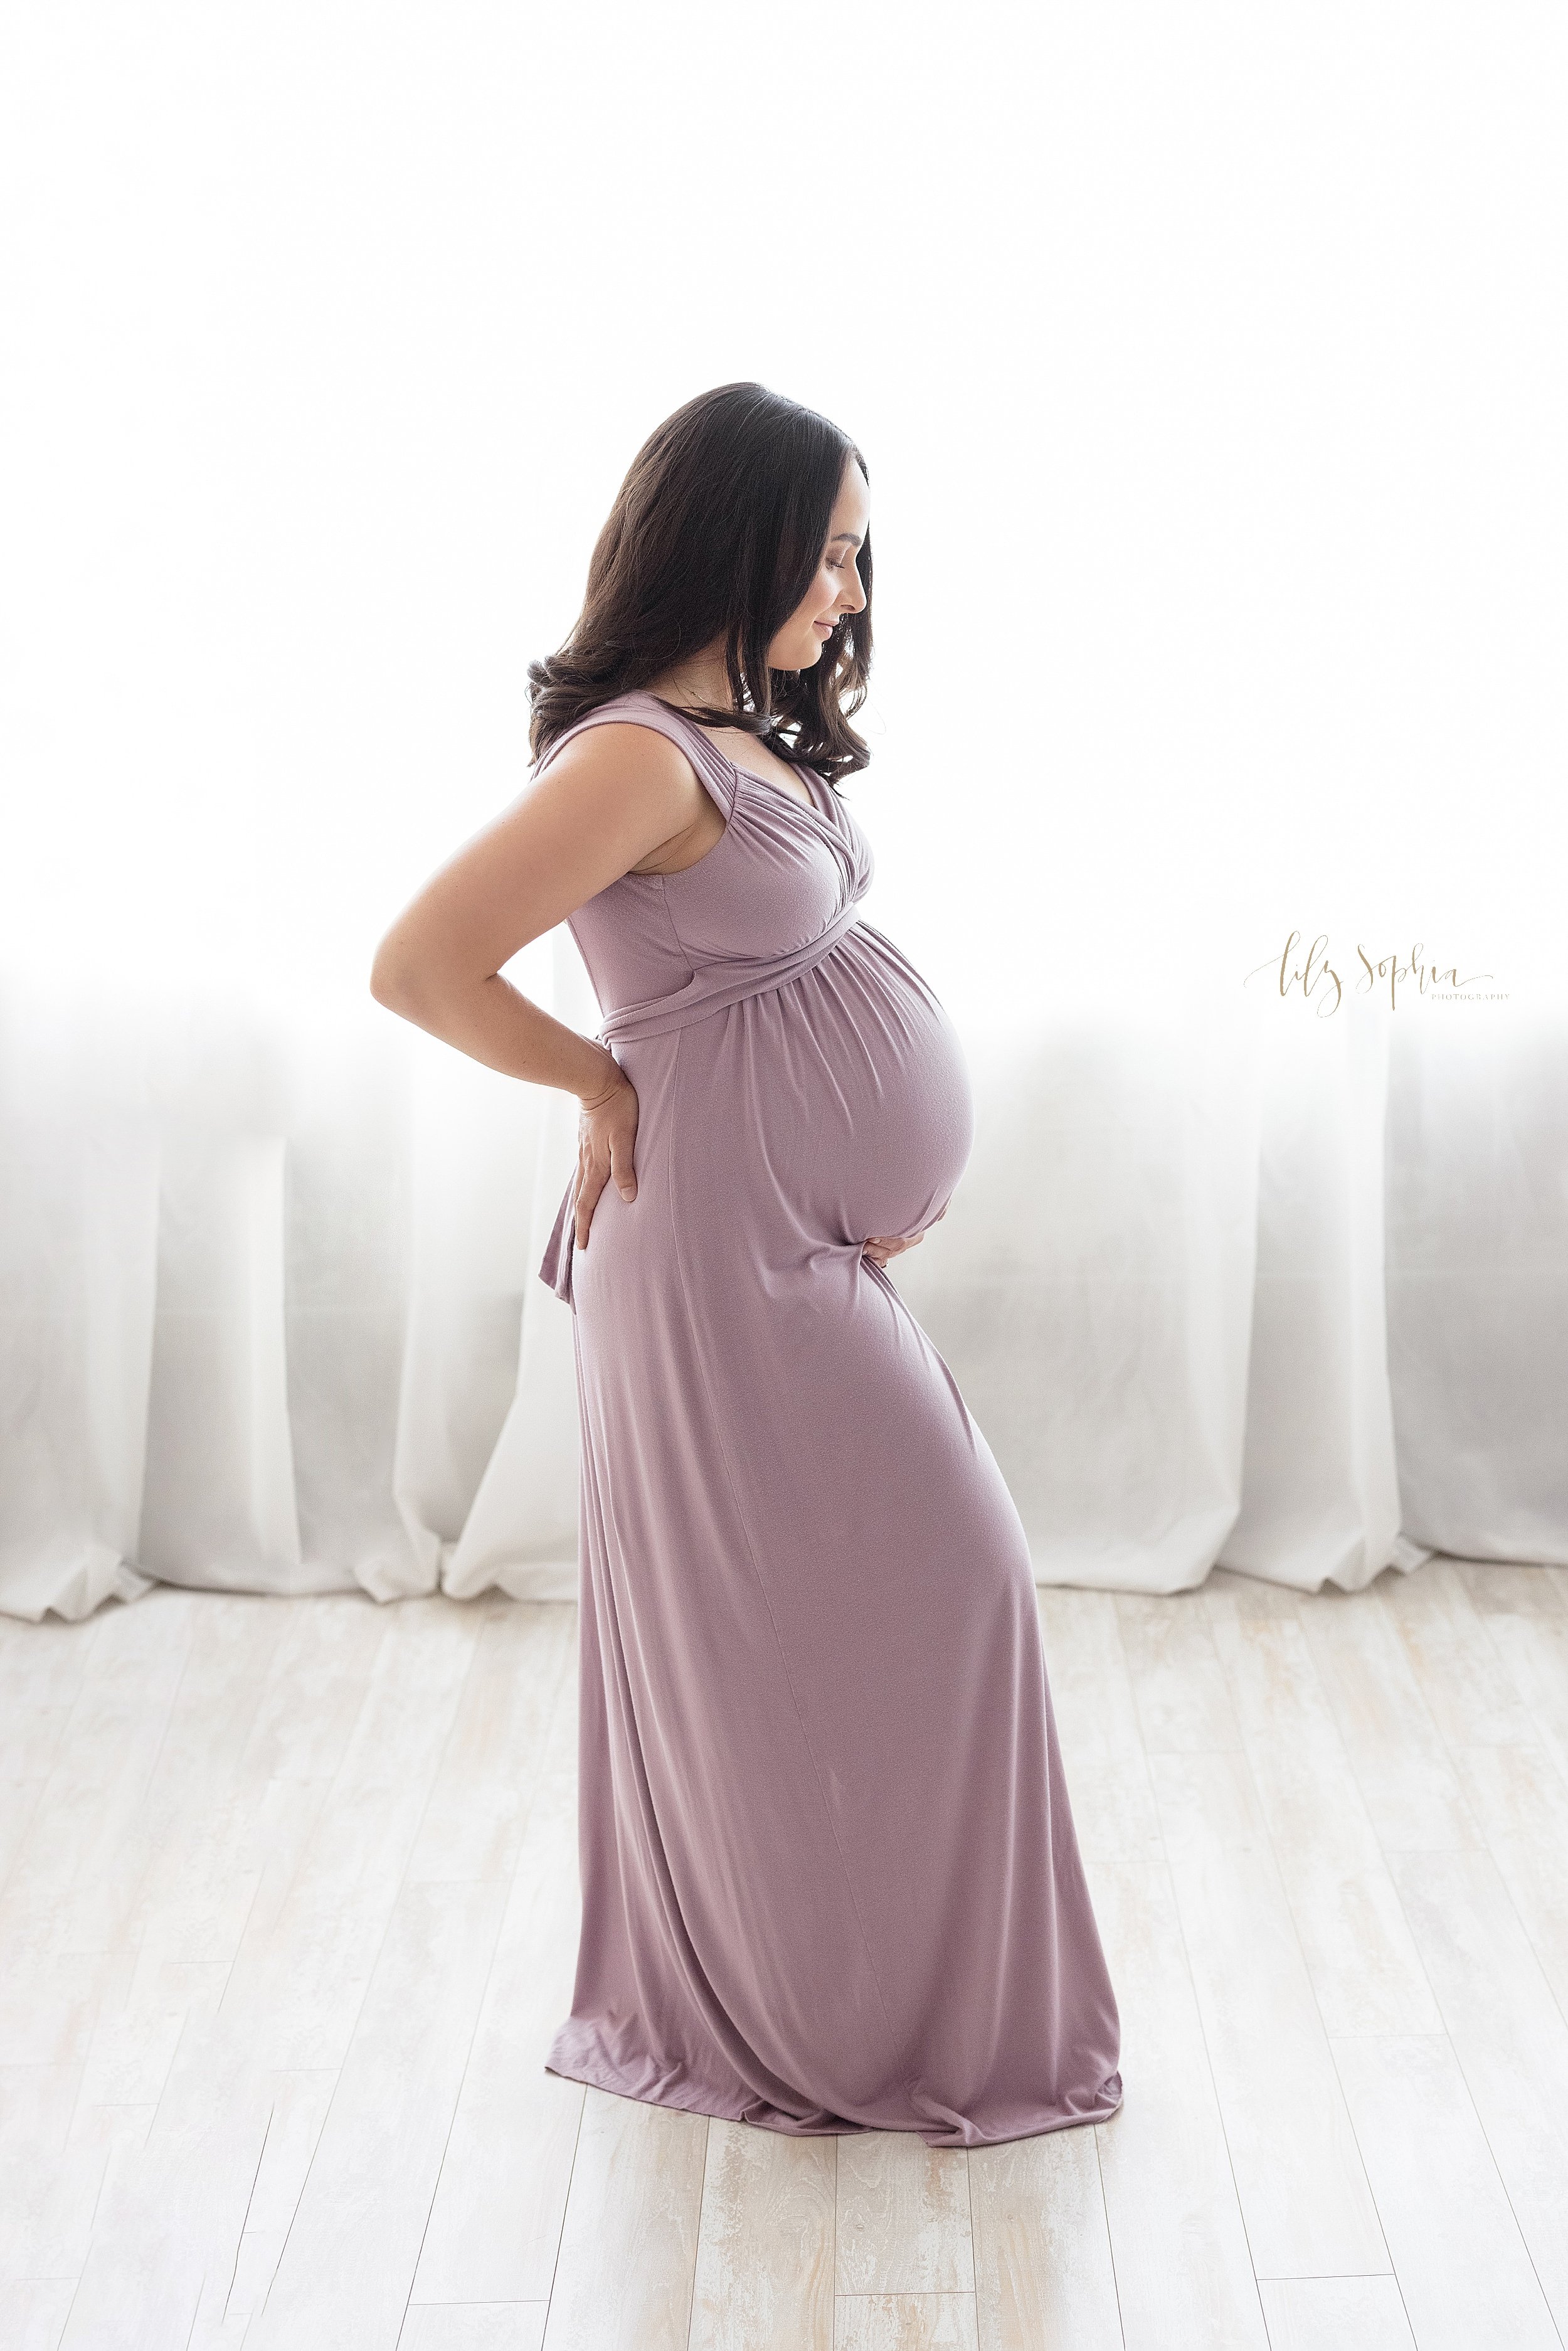 atlanta-family-maternity-photoshoot-pregnancy-portraits-tucker-brookhaven-buckhead-roswell-alpharetta_8535.jpg